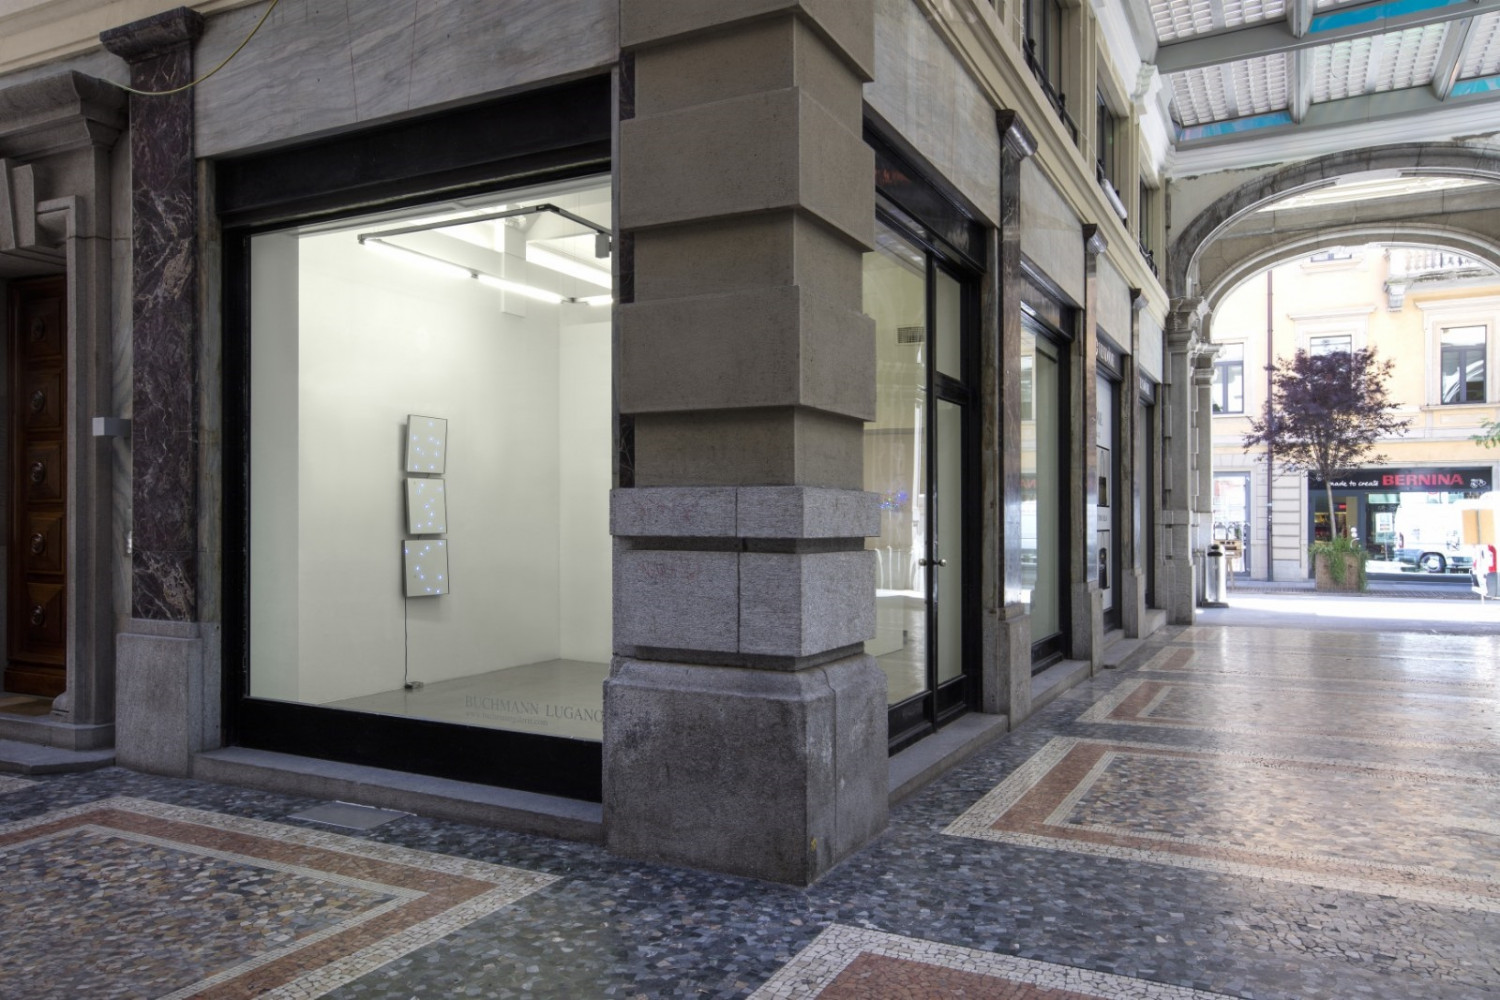 Tatsuo Miyajima, Installationsansicht, Buchmann Lugano, 2017